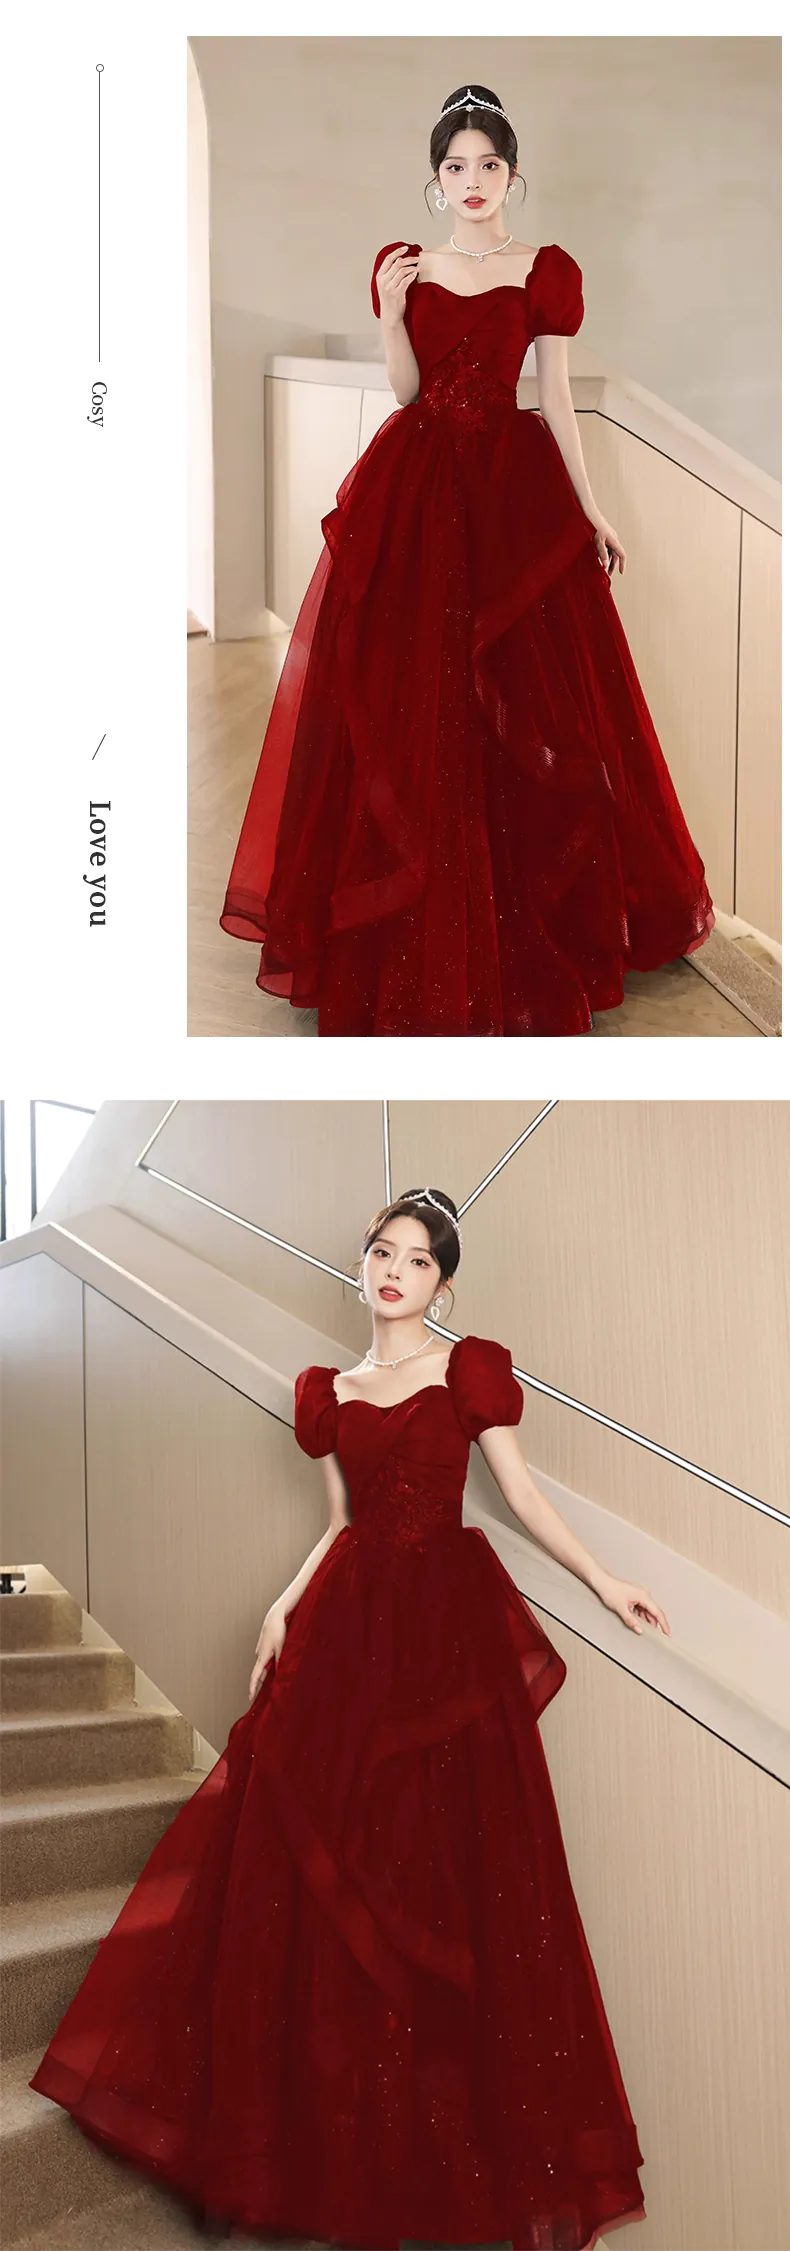 Elegant-Burgundy-Short-Sleeve-Prom-Long-Dress-Evening-Ball-Gown12